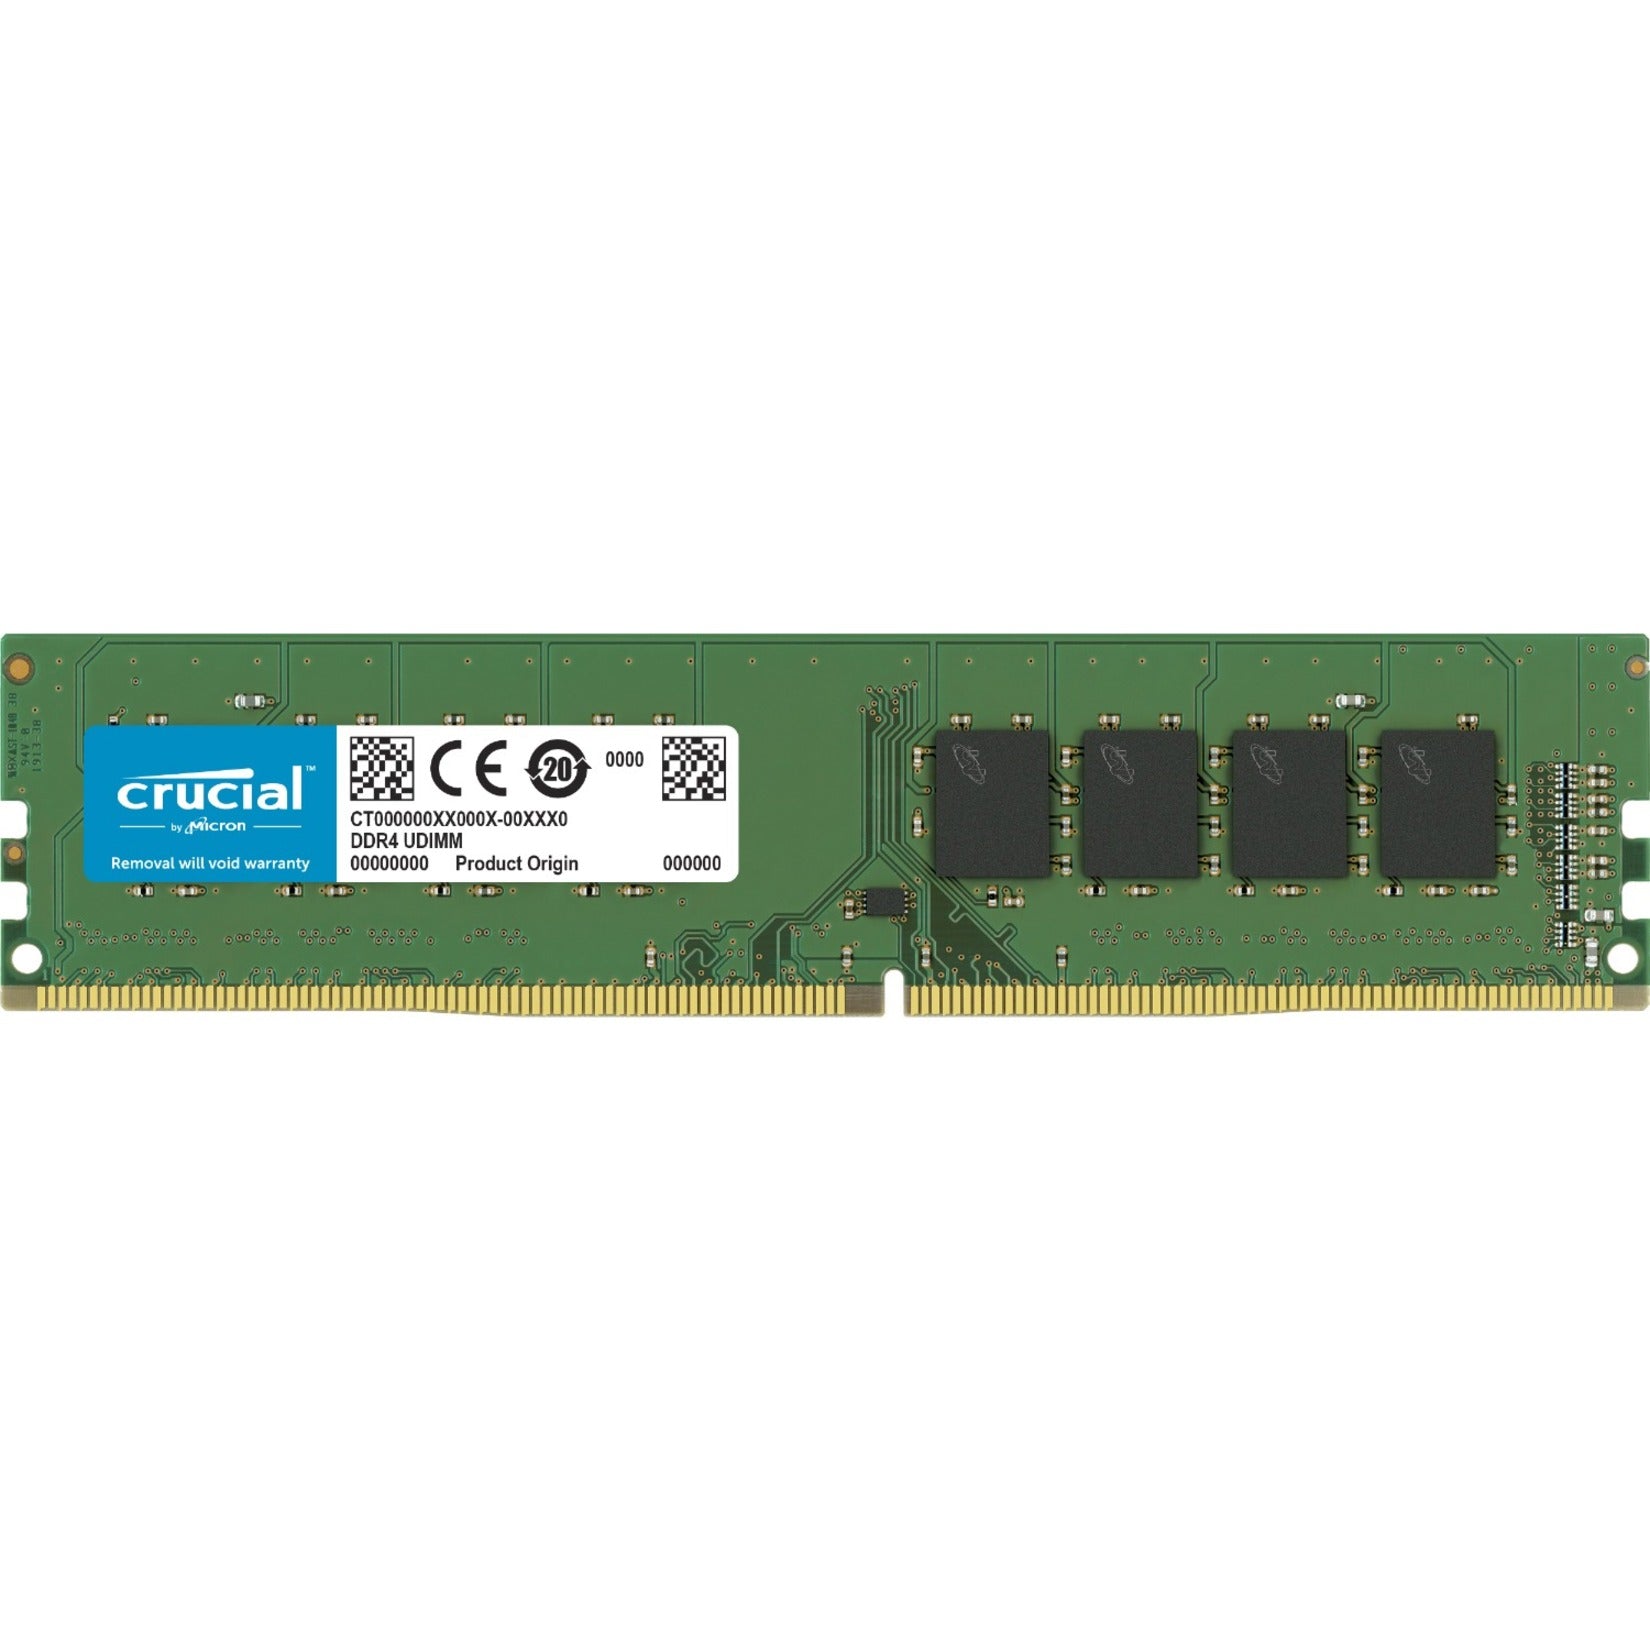 Crucial CT16G4DFD832A 16GB DDR4 SDRAM Memory Module, High Performance RAM for Desktop PC